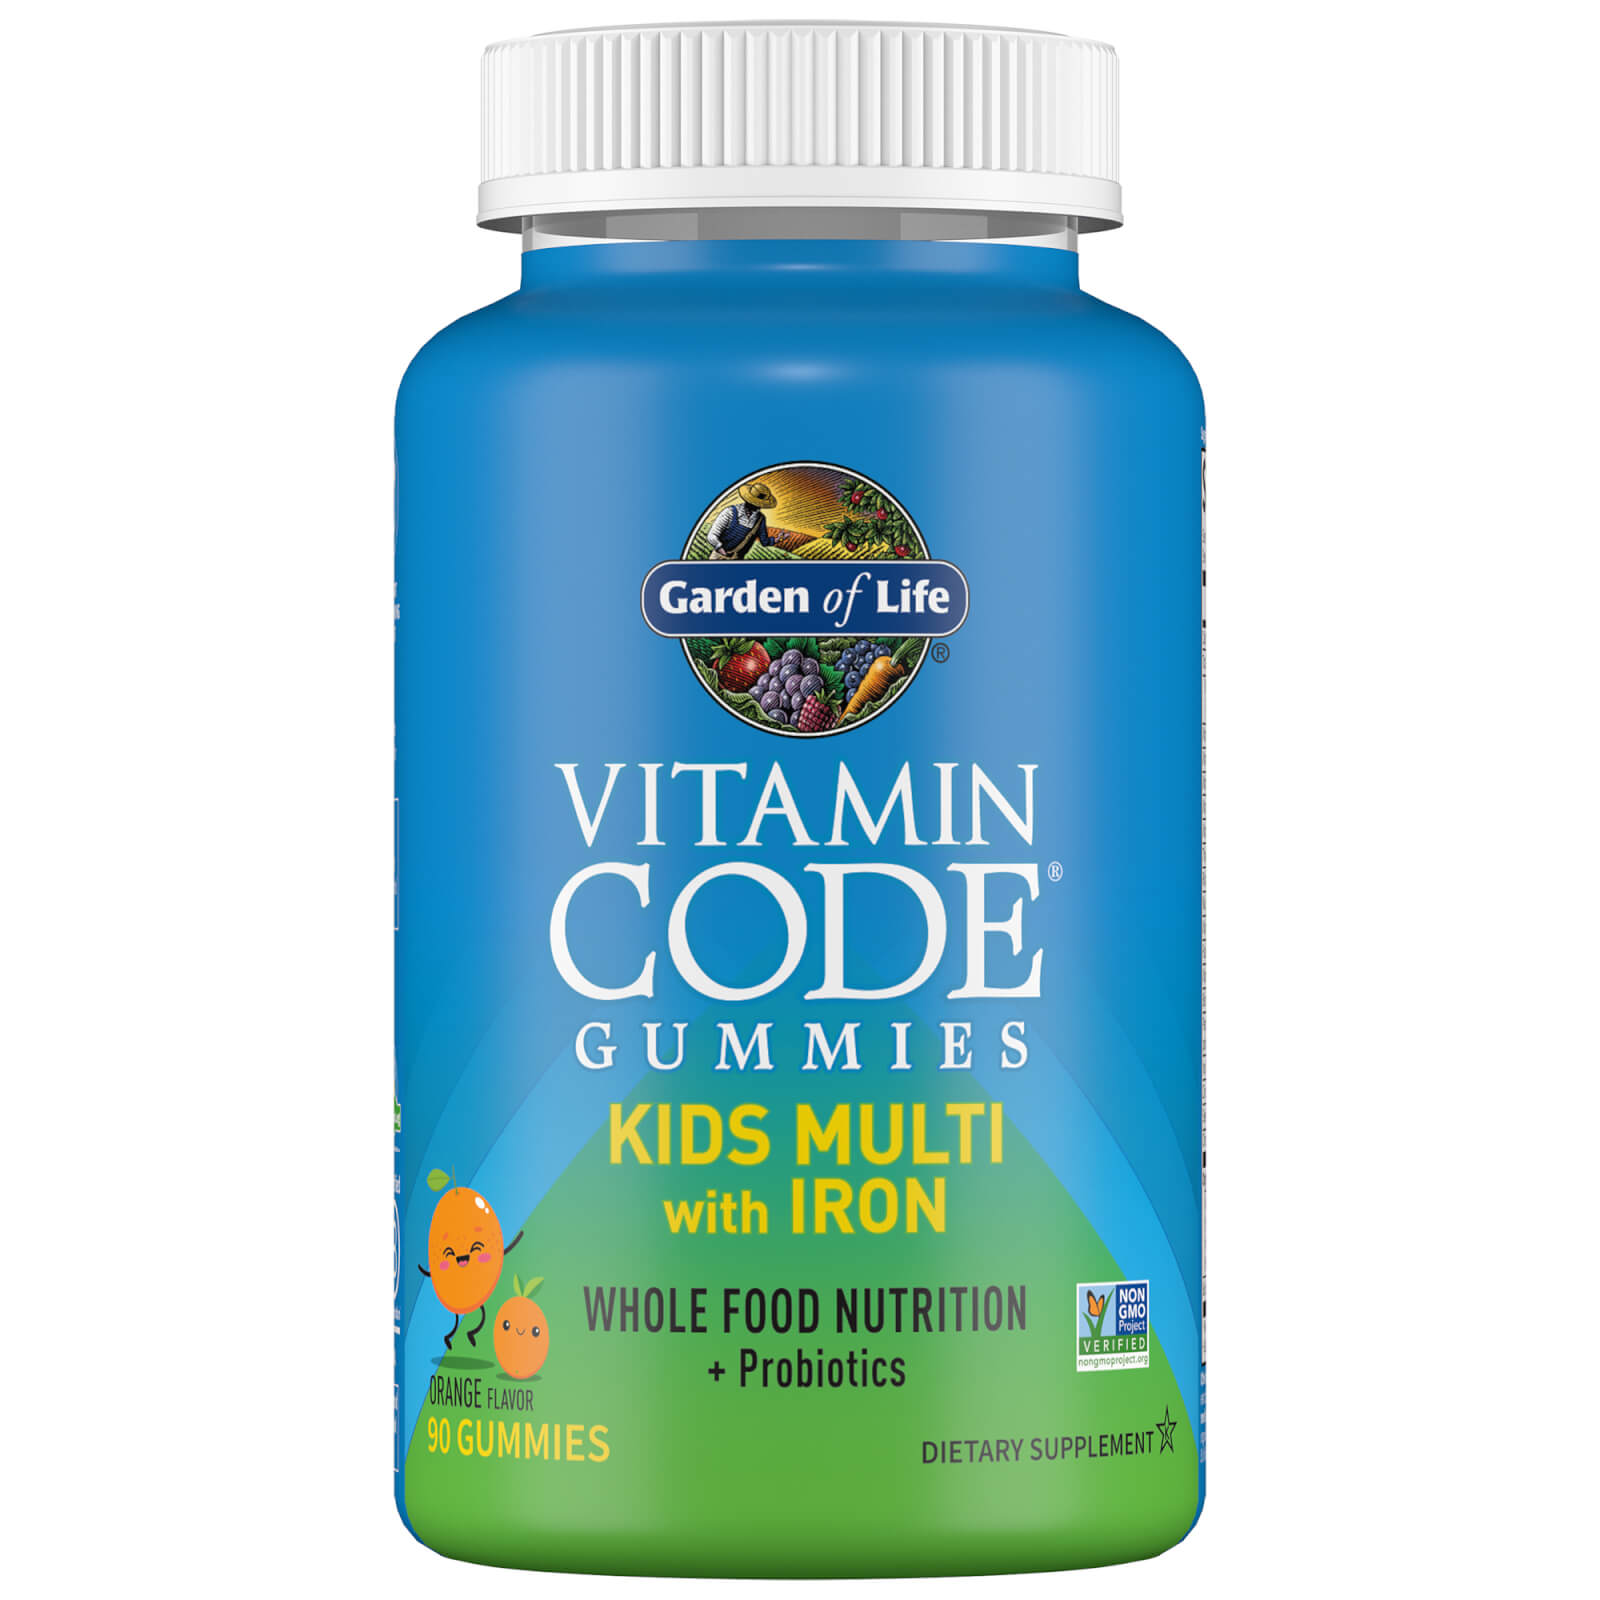 Vitamin Code Kids Multi Plus Iron Gummies